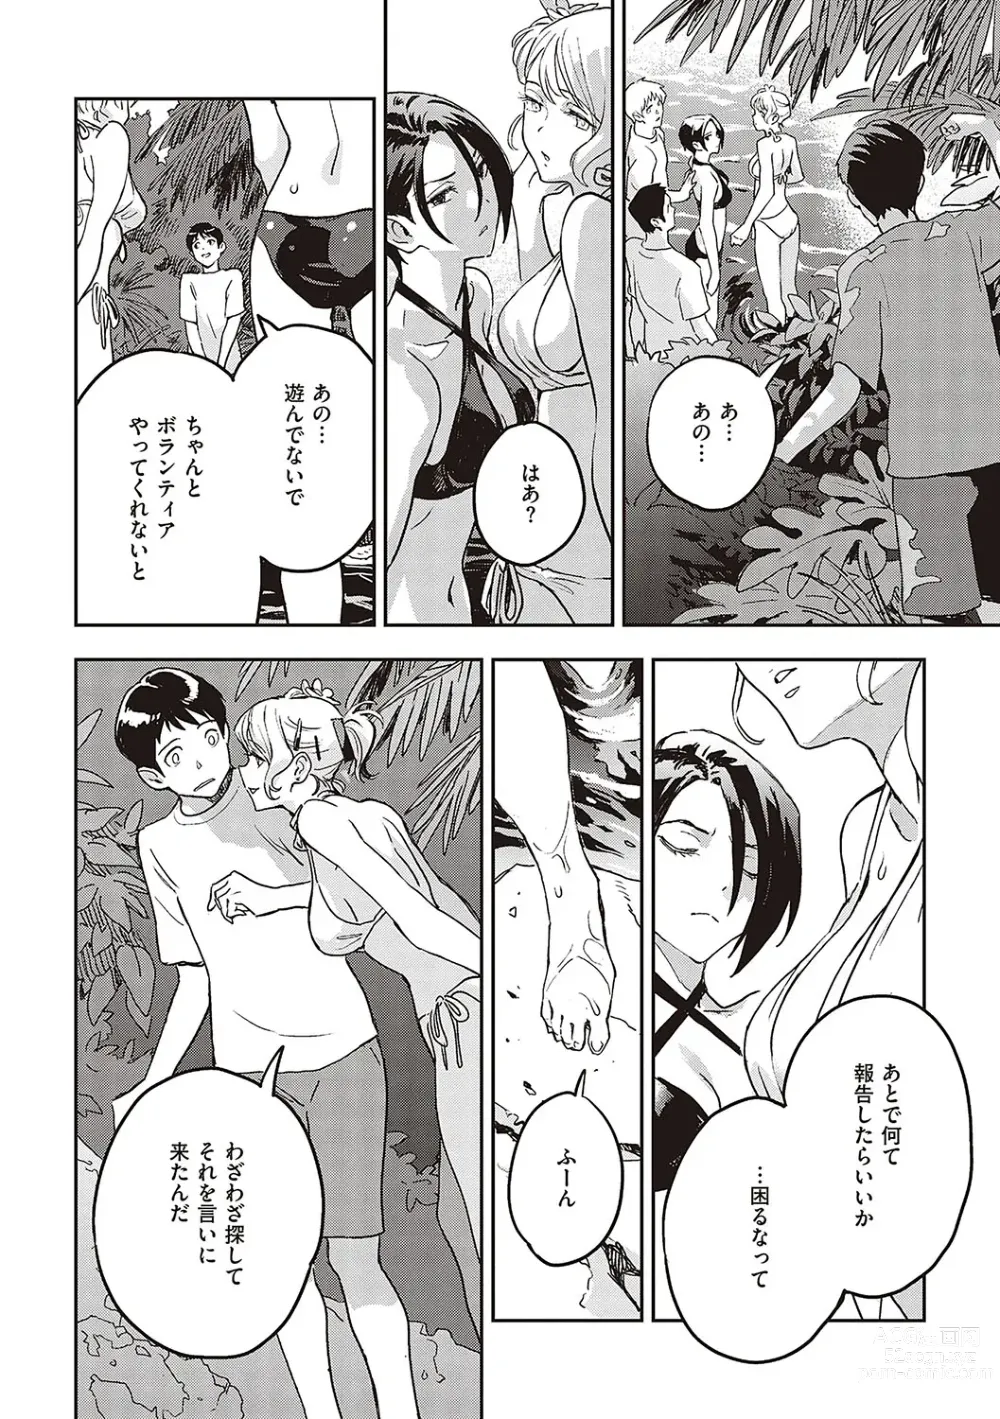 Page 13 of manga Ashu to Resonance - The resonance with subspecies